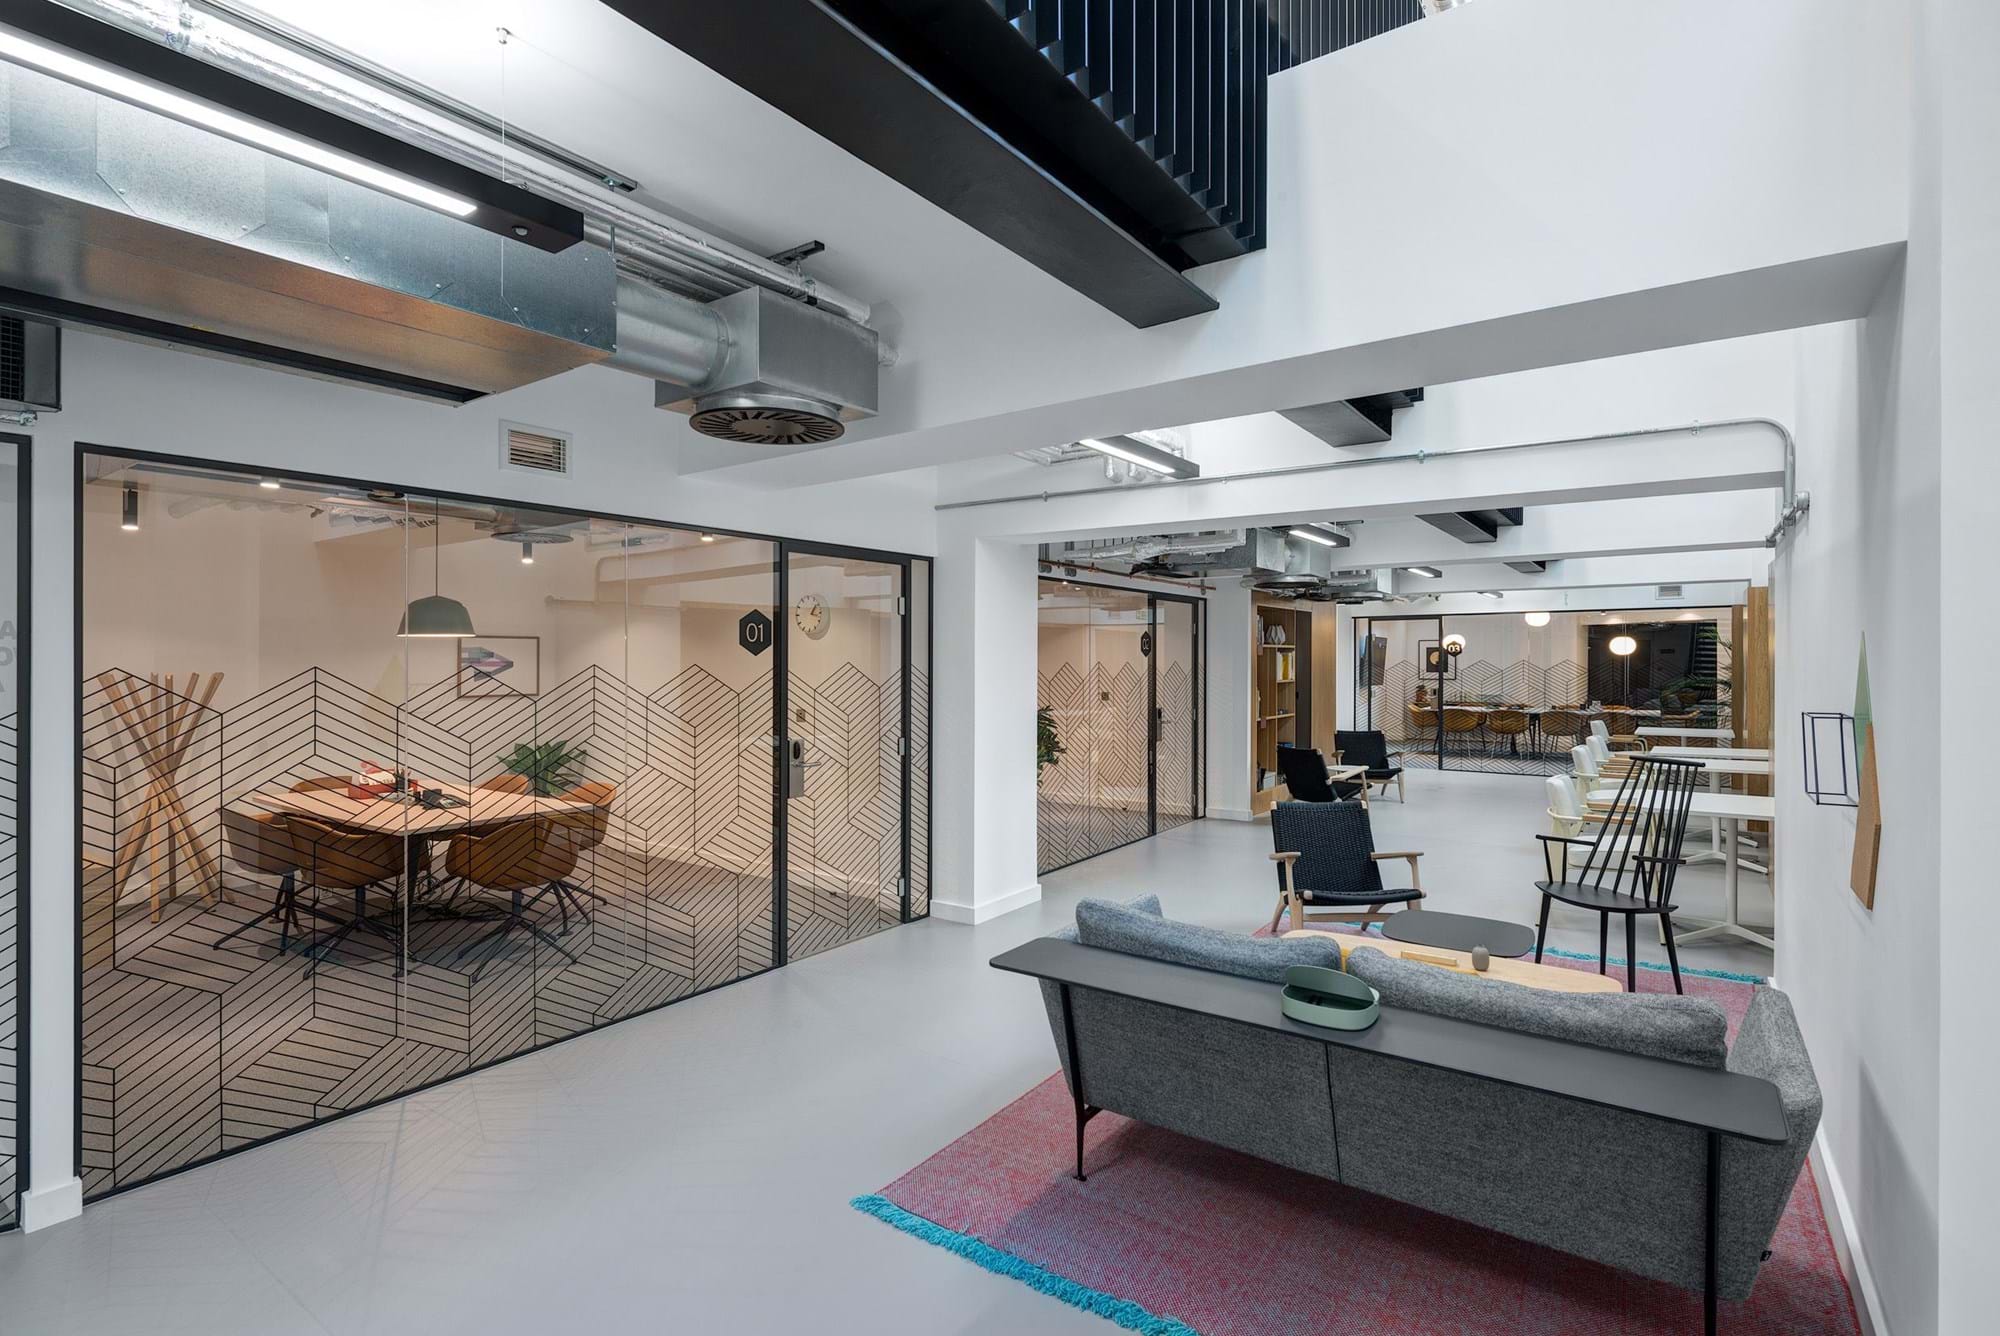 Modus Workspace office design, fit out and refurbishment - Regus spaces Epworth - Spaces Epworth 10 highres sRGB.jpg